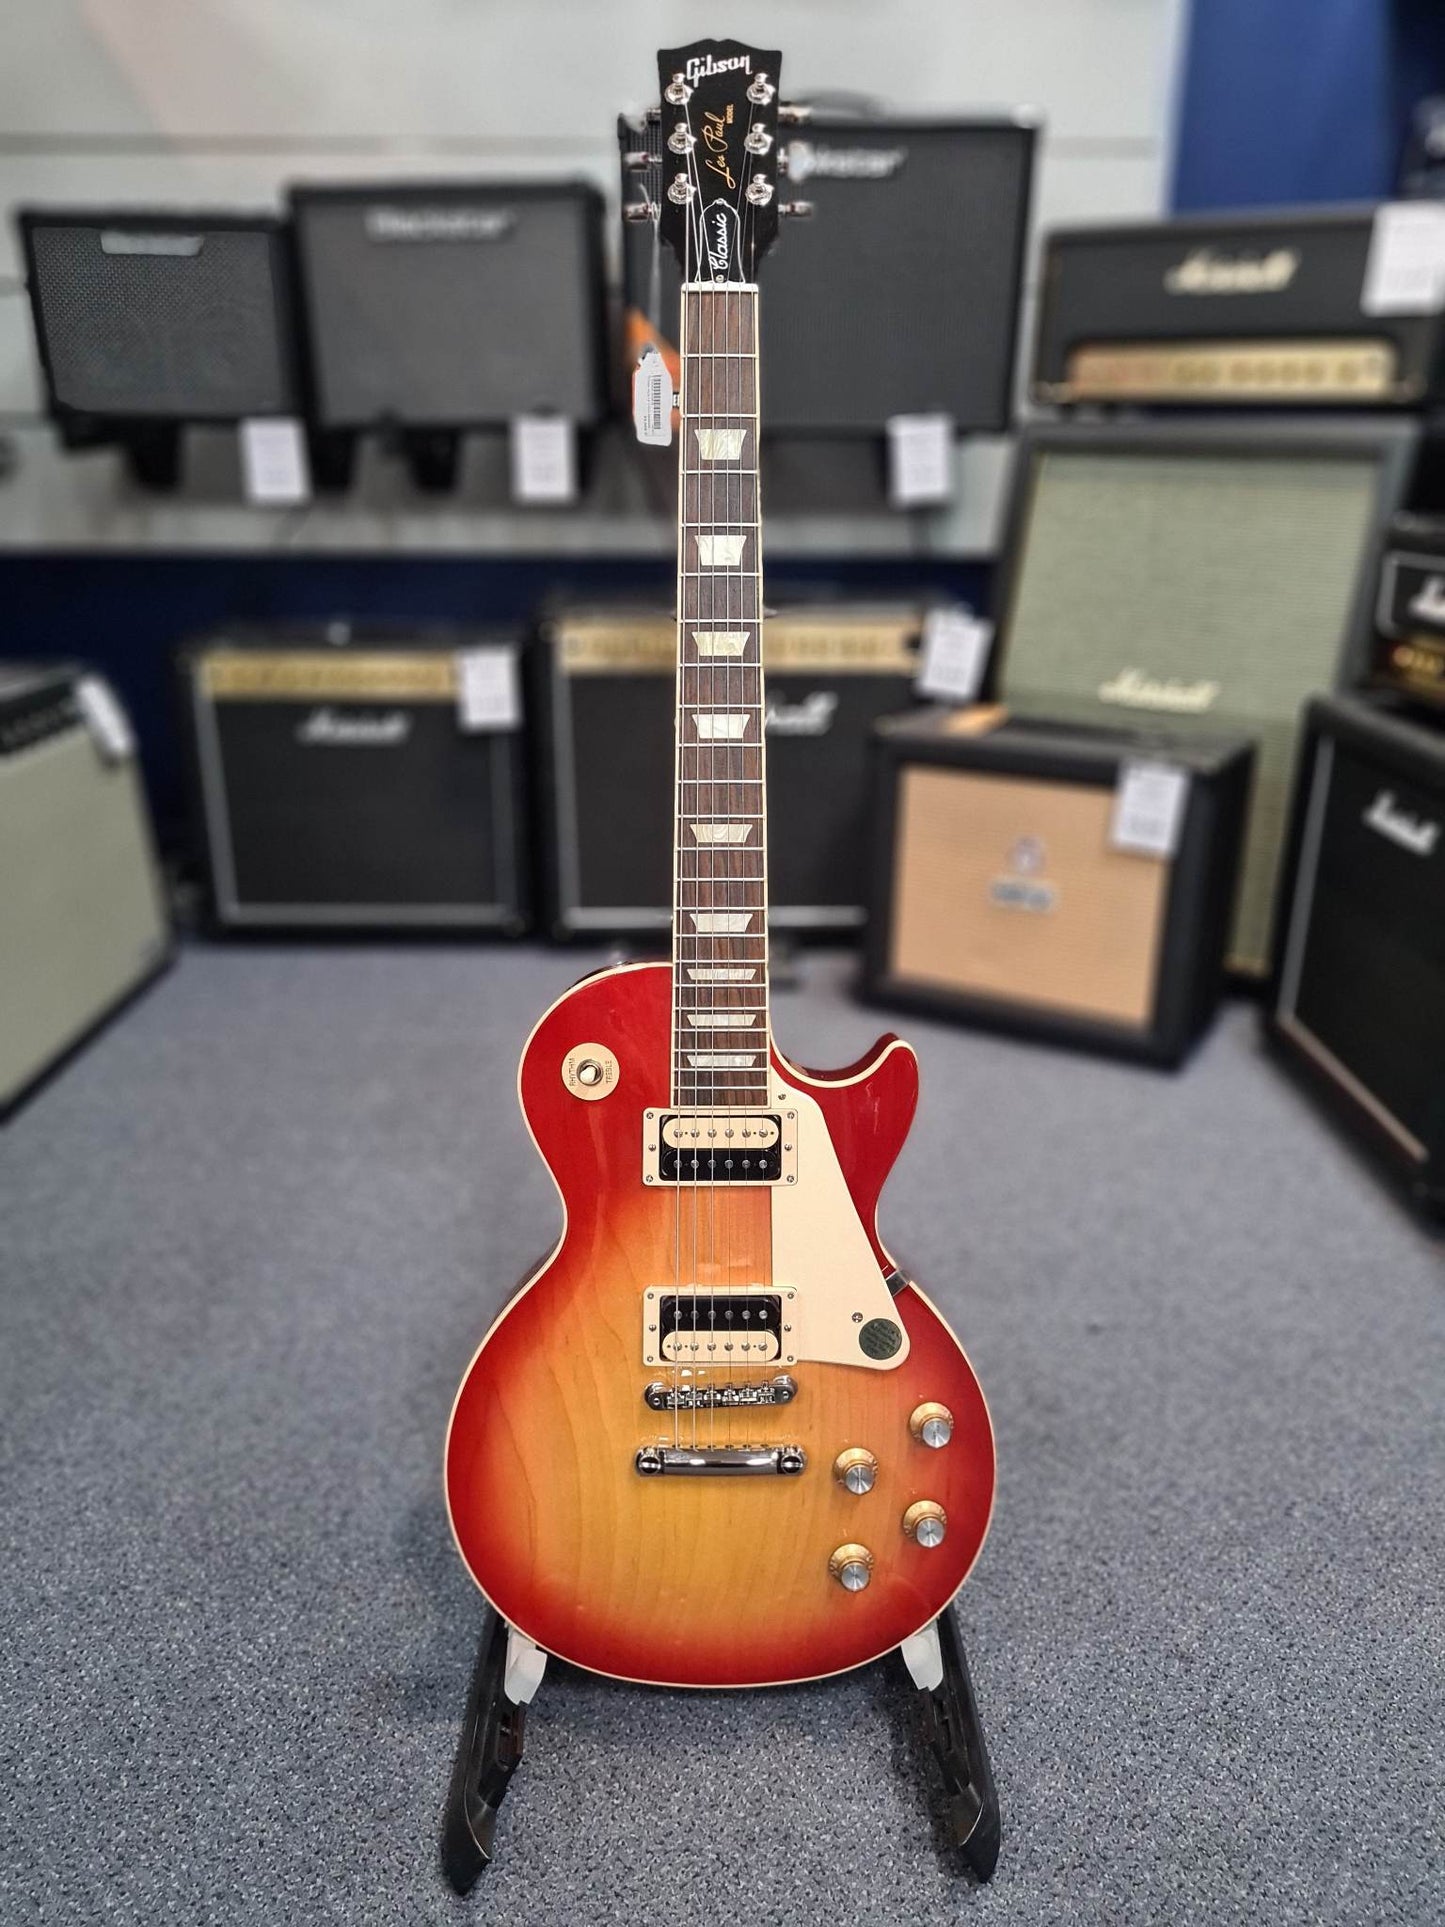 Gibson Les Paul Classic in Heritage Cherry Sunburst